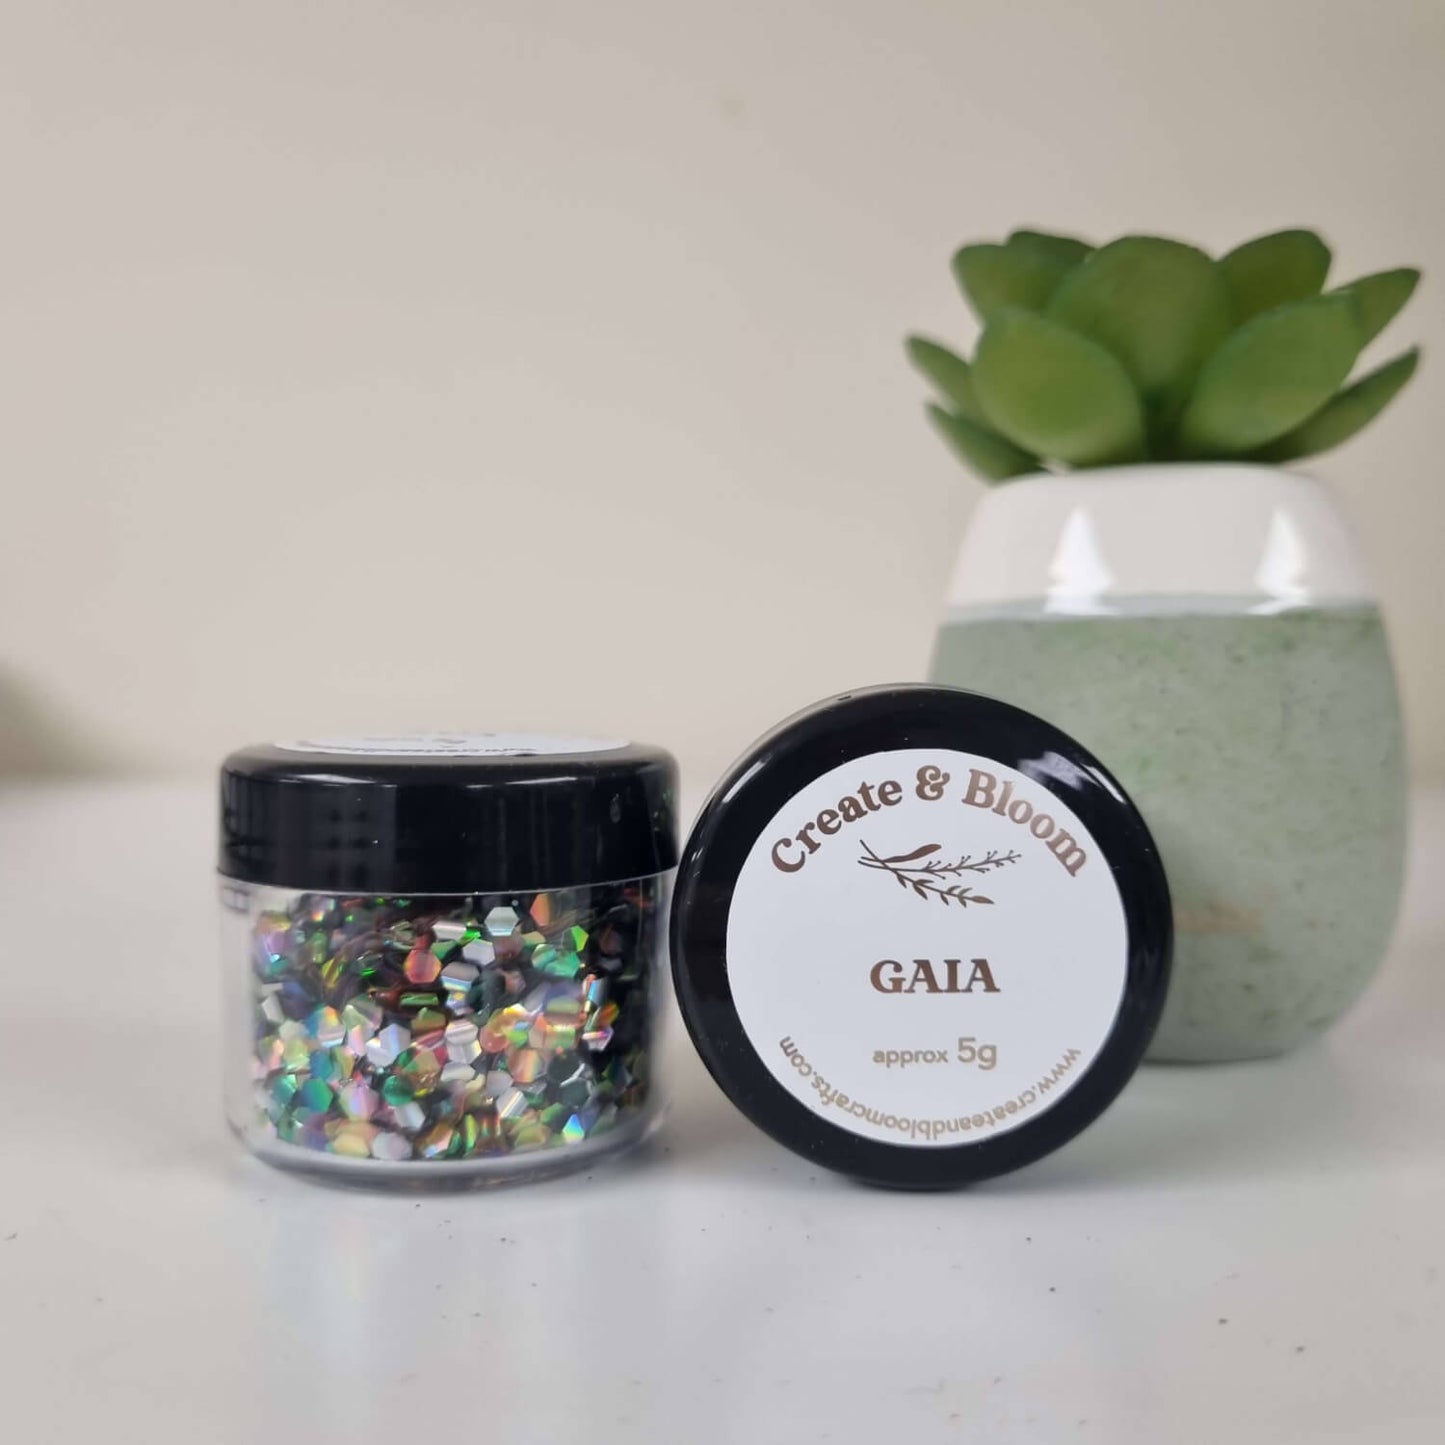 Textured Merman Scales Glitter: Gaia